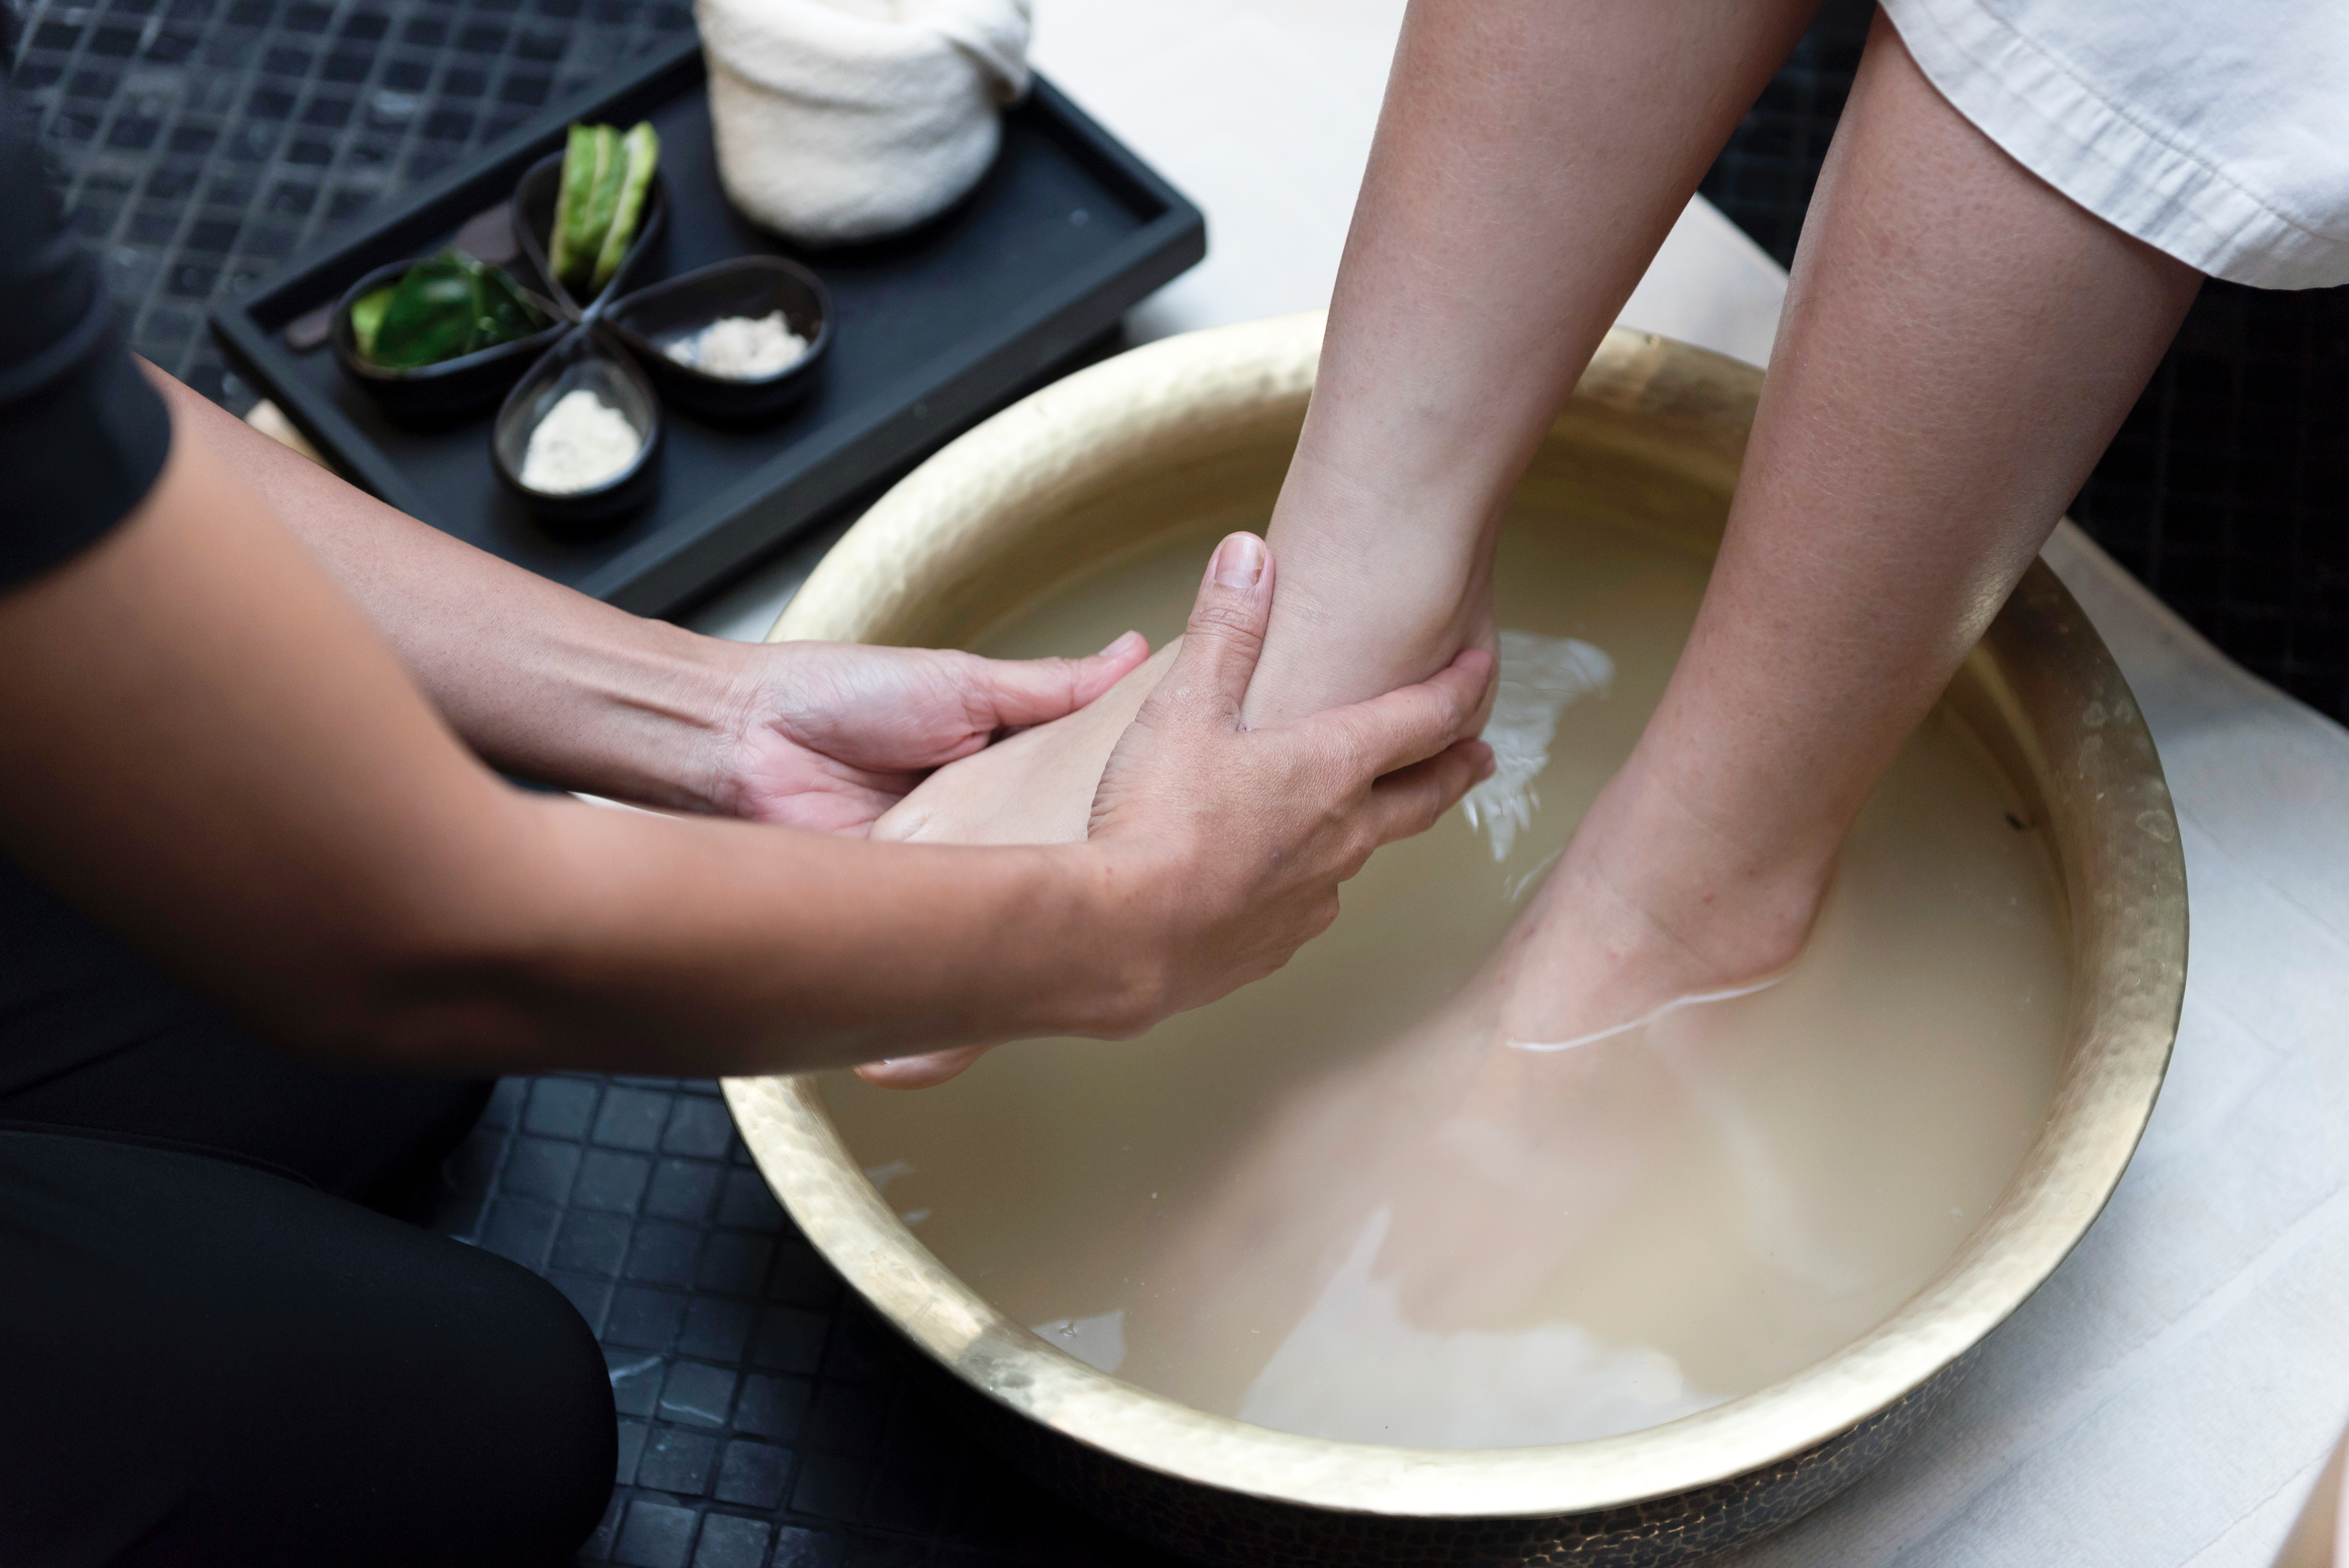 https://0901.nccdn.net/4_2/000/000/056/7dc/Canva---Foot-washing-in-spa-before-treatment-5393x3600.jpg